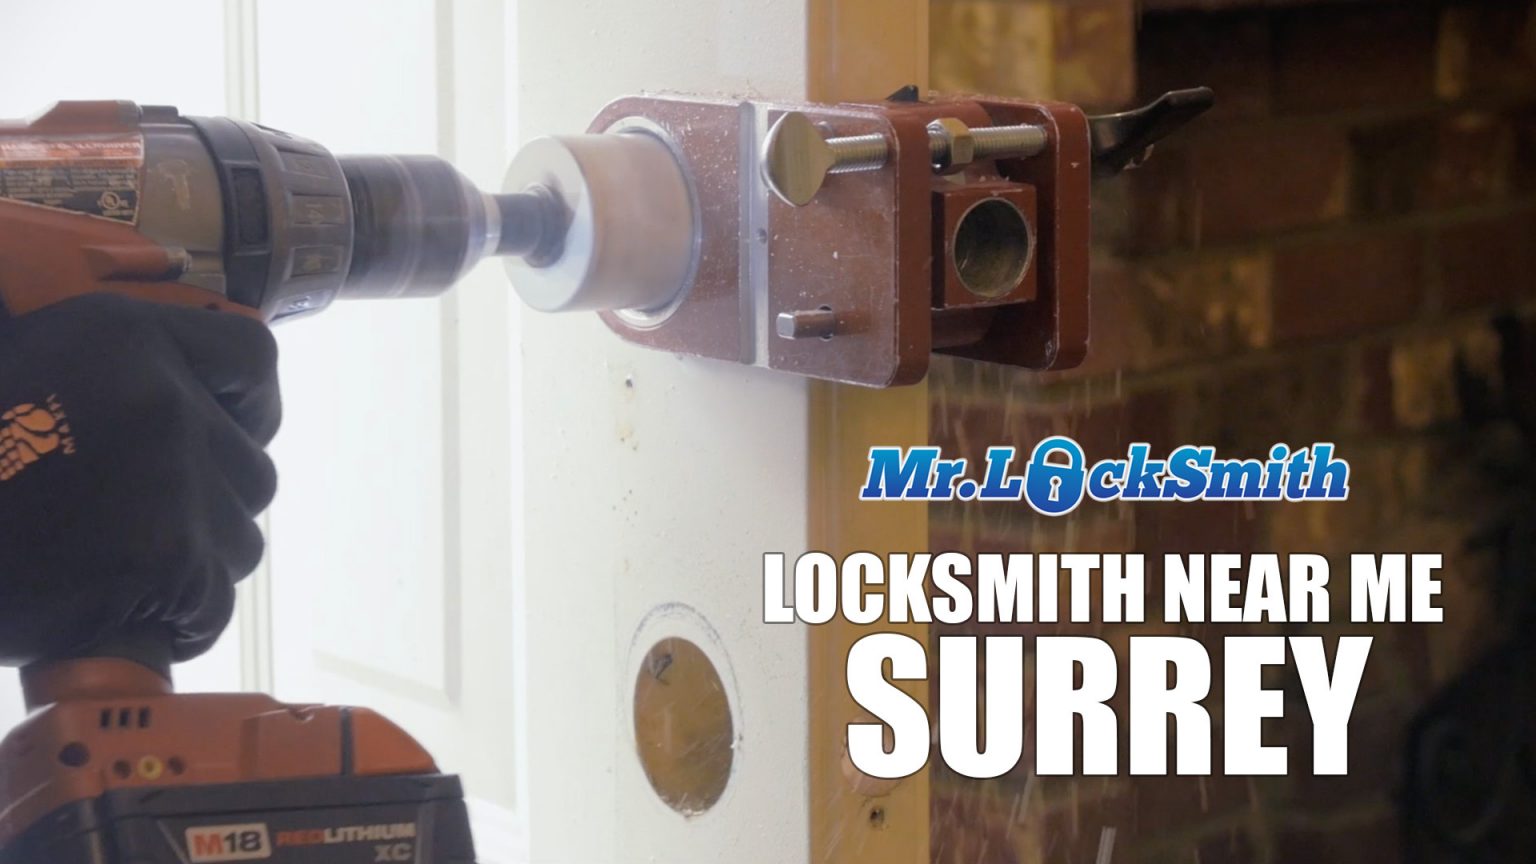 Locksmith Near Me Surrey - Mr. Locksmith Surrey BC